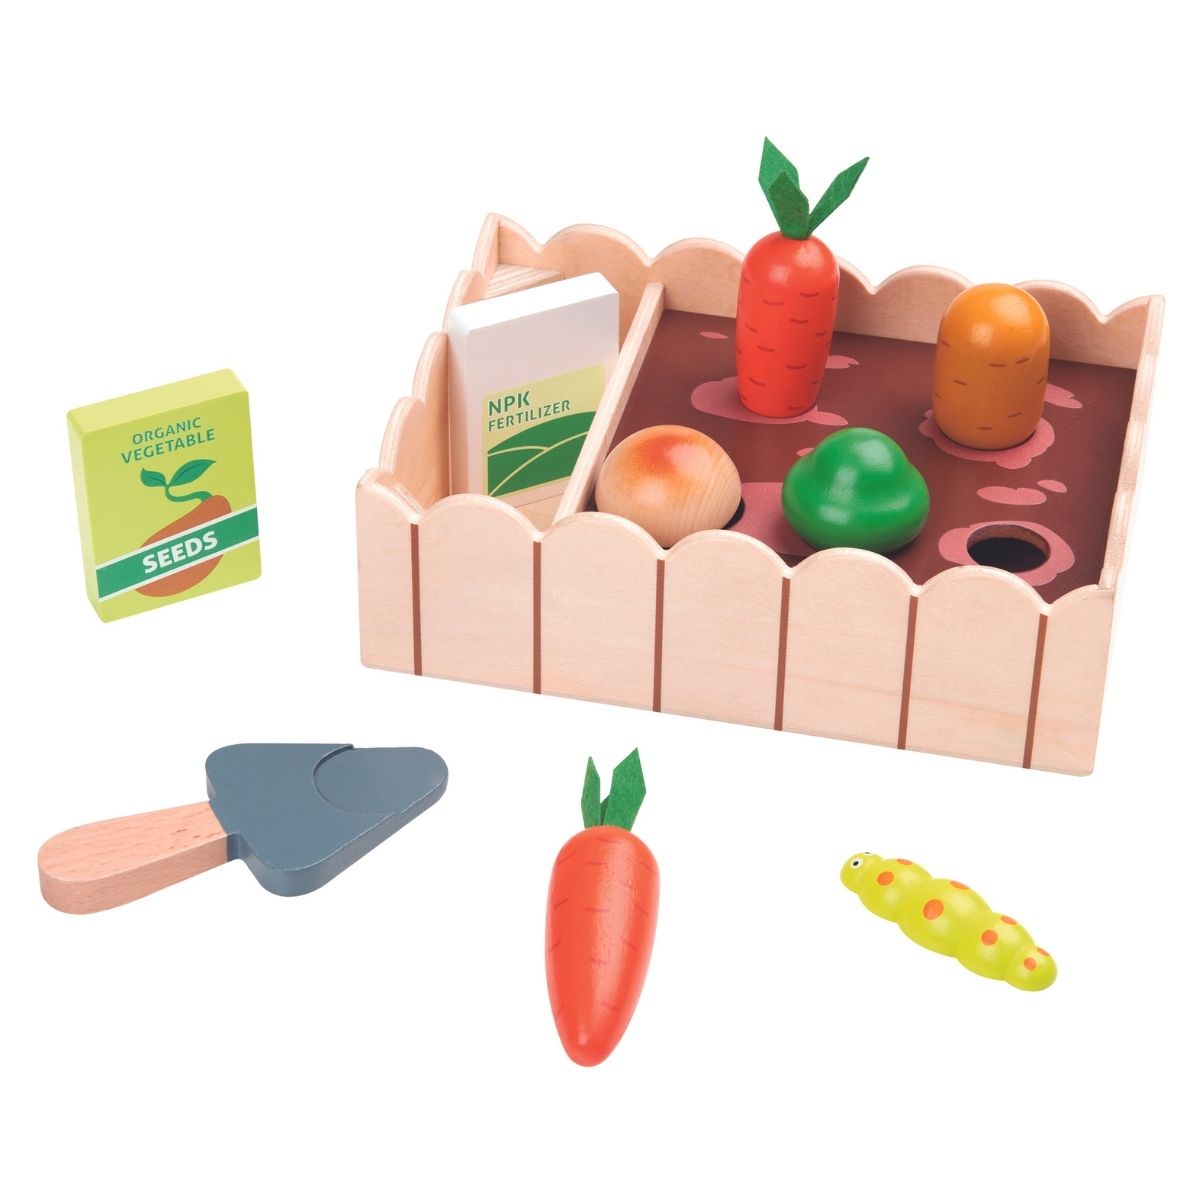 Lelin Vegetable Planting in Box